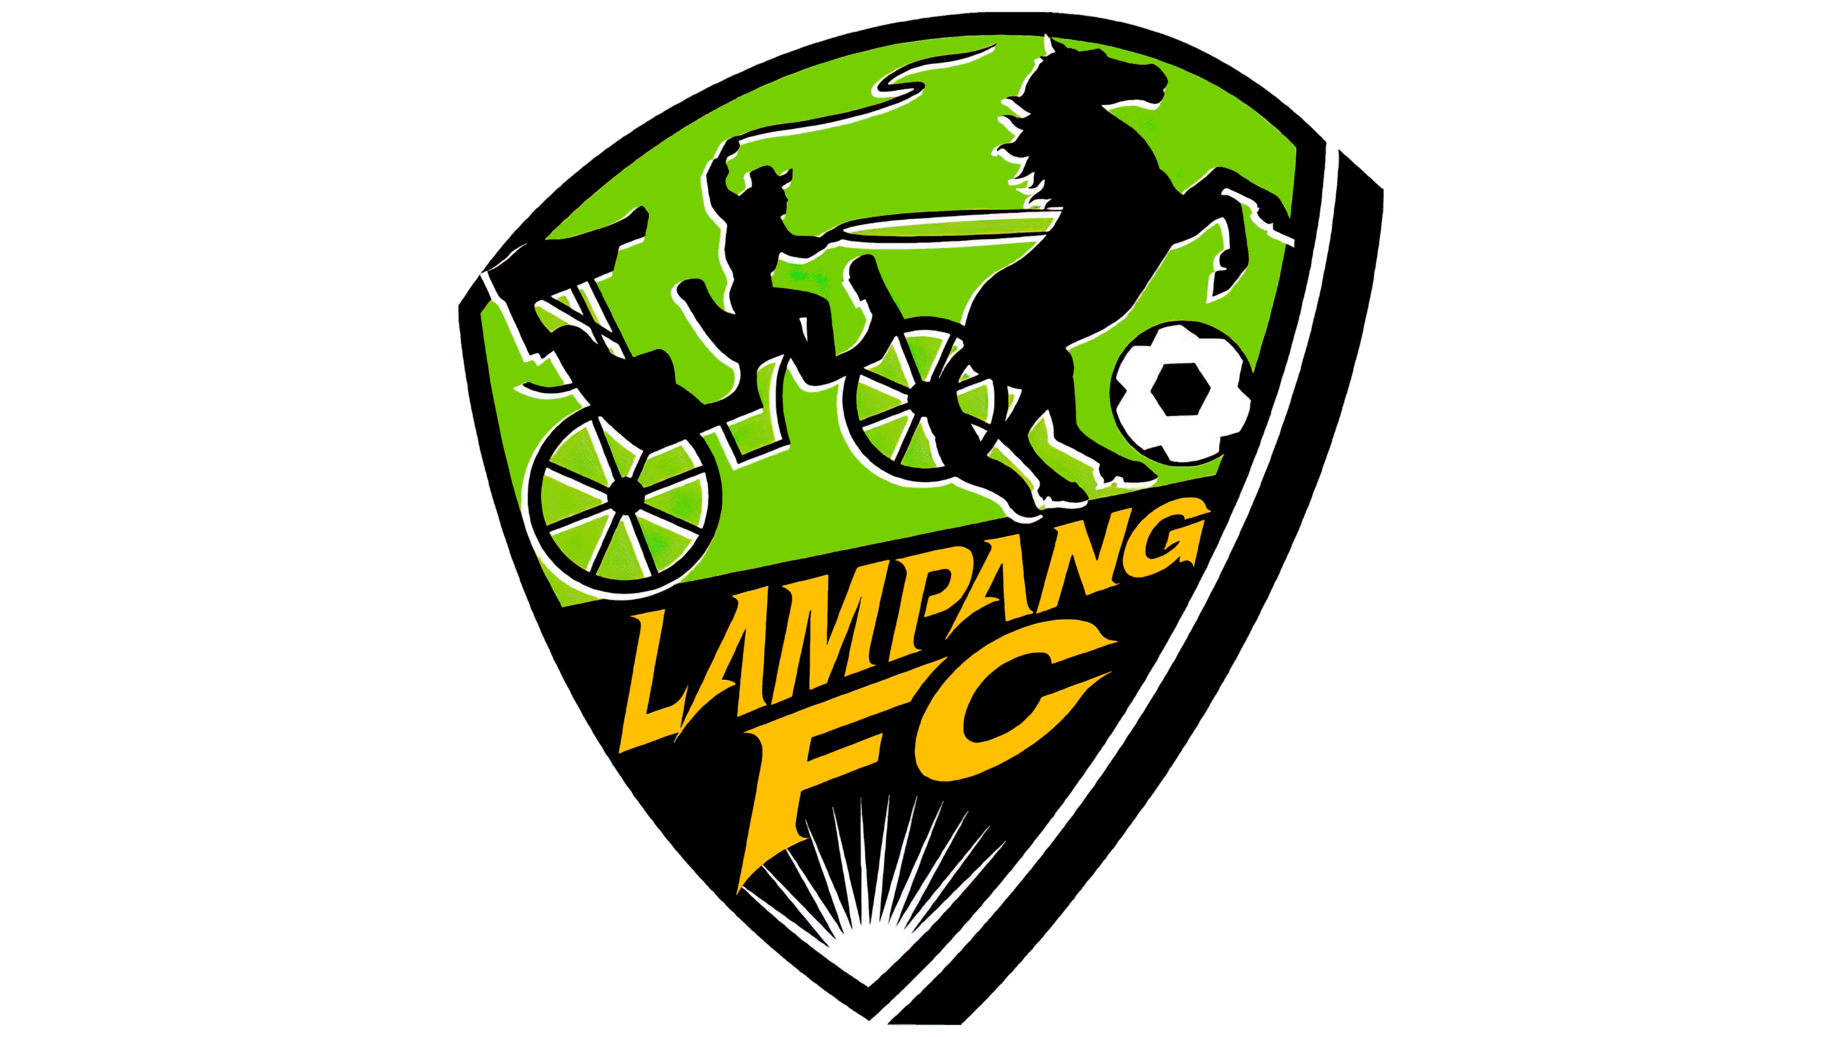 Lampang logo